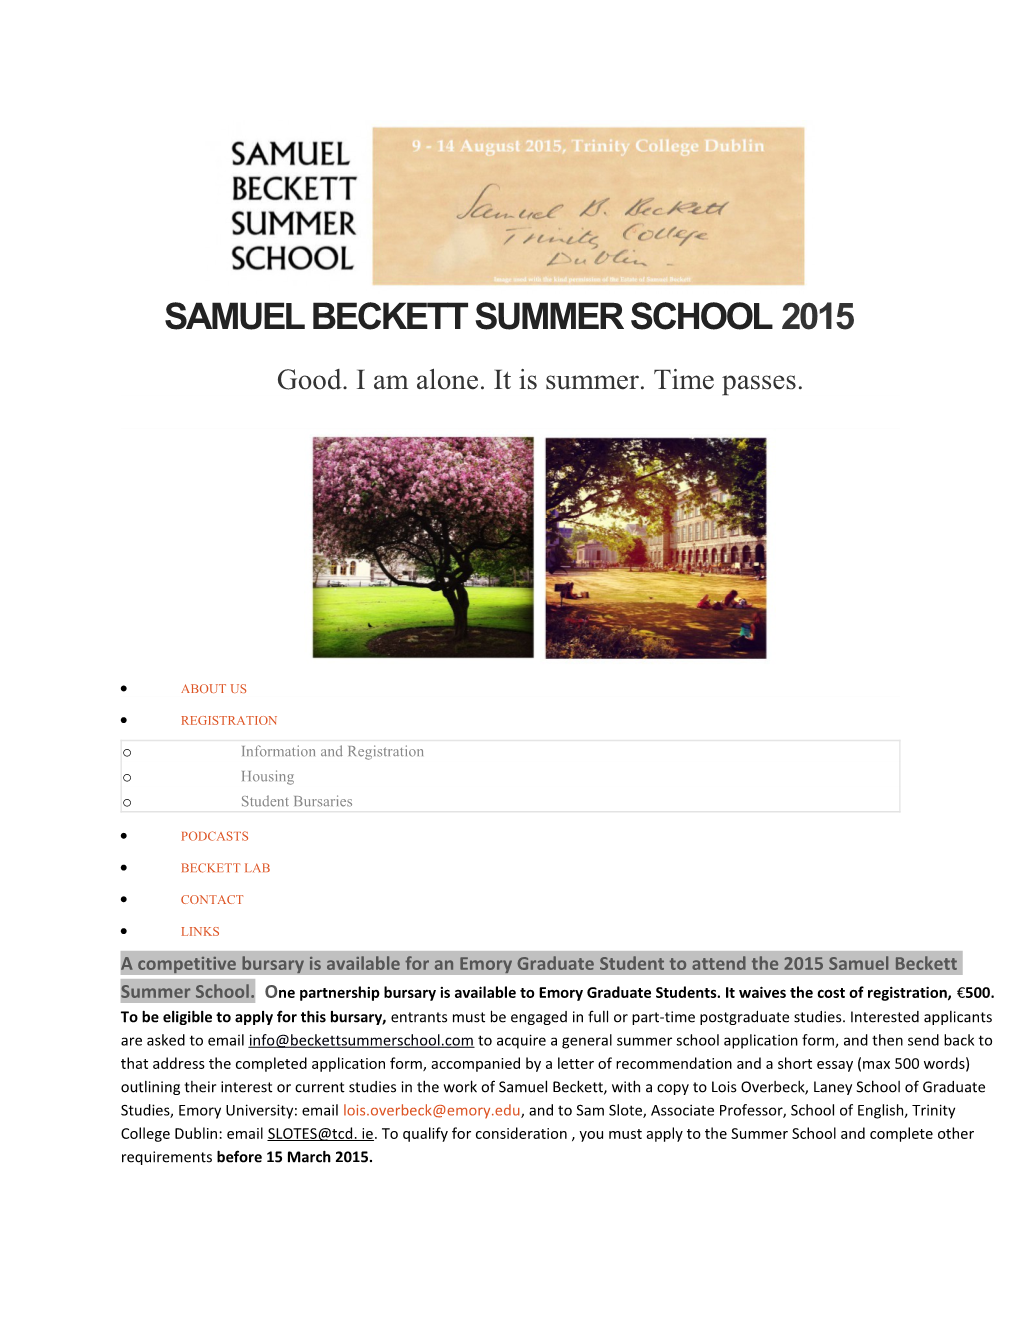 Samuel Beckett Summer School 2015